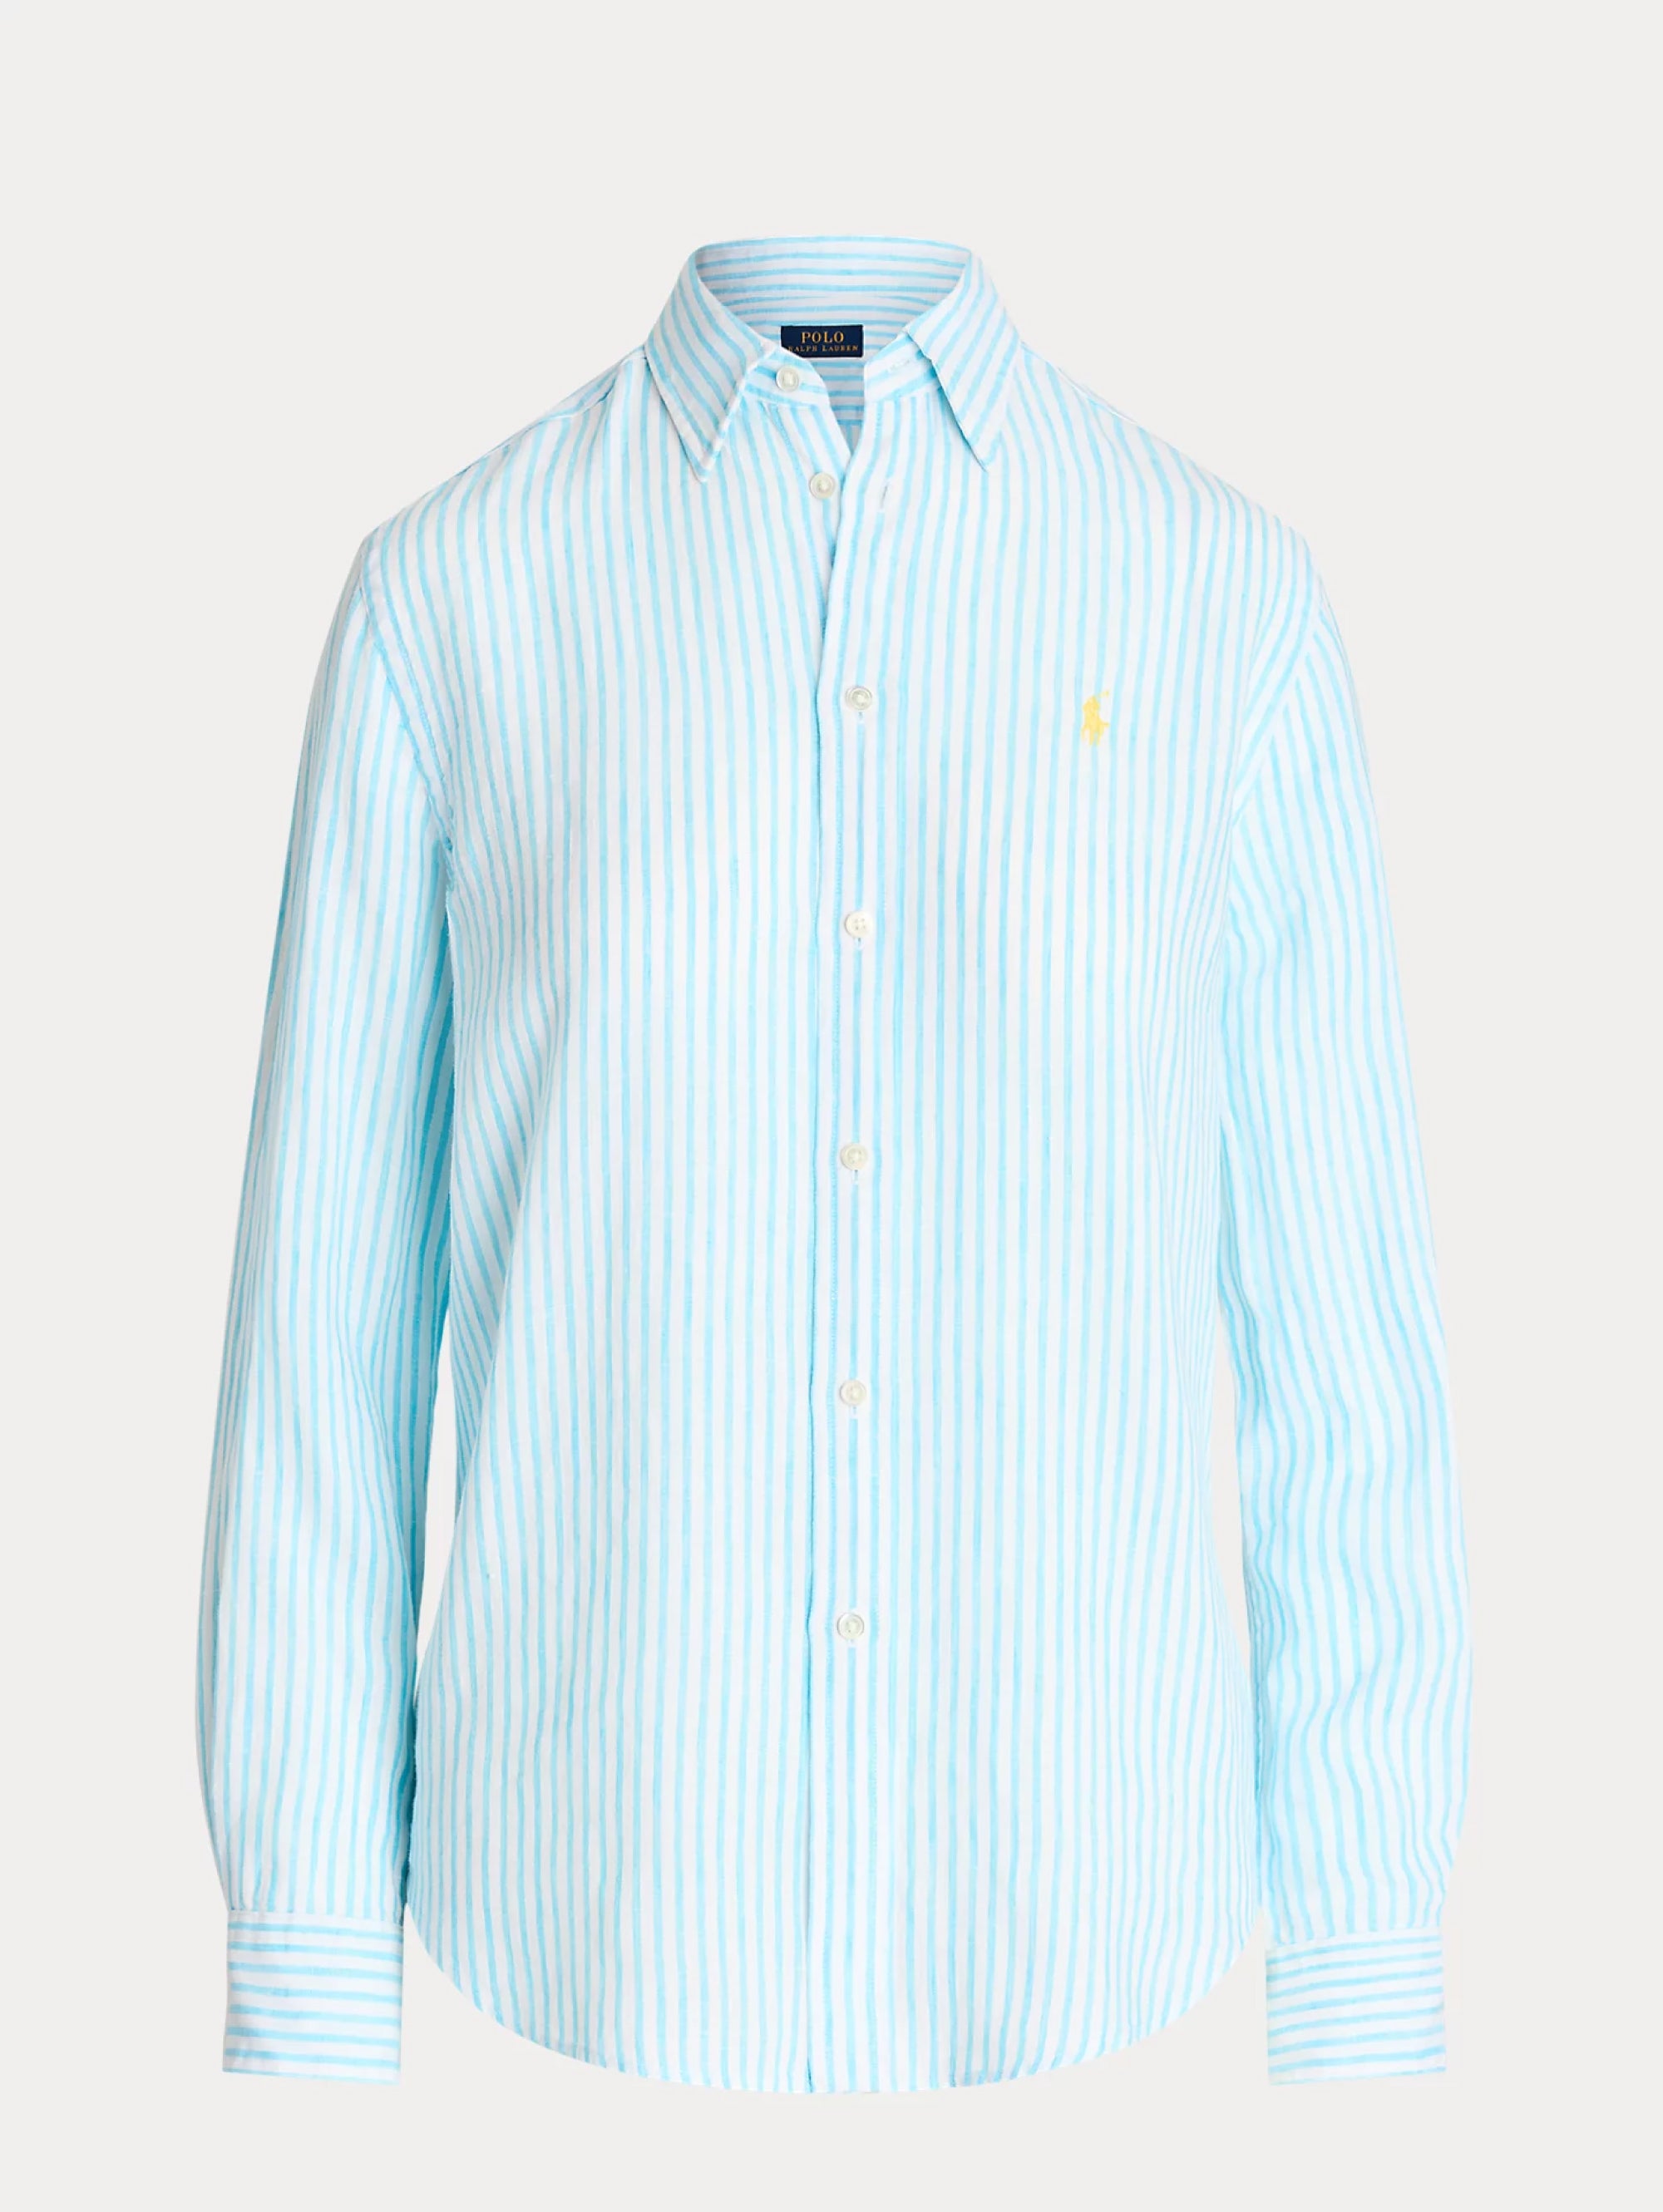 Turquoise/White Striped Linen Shirt